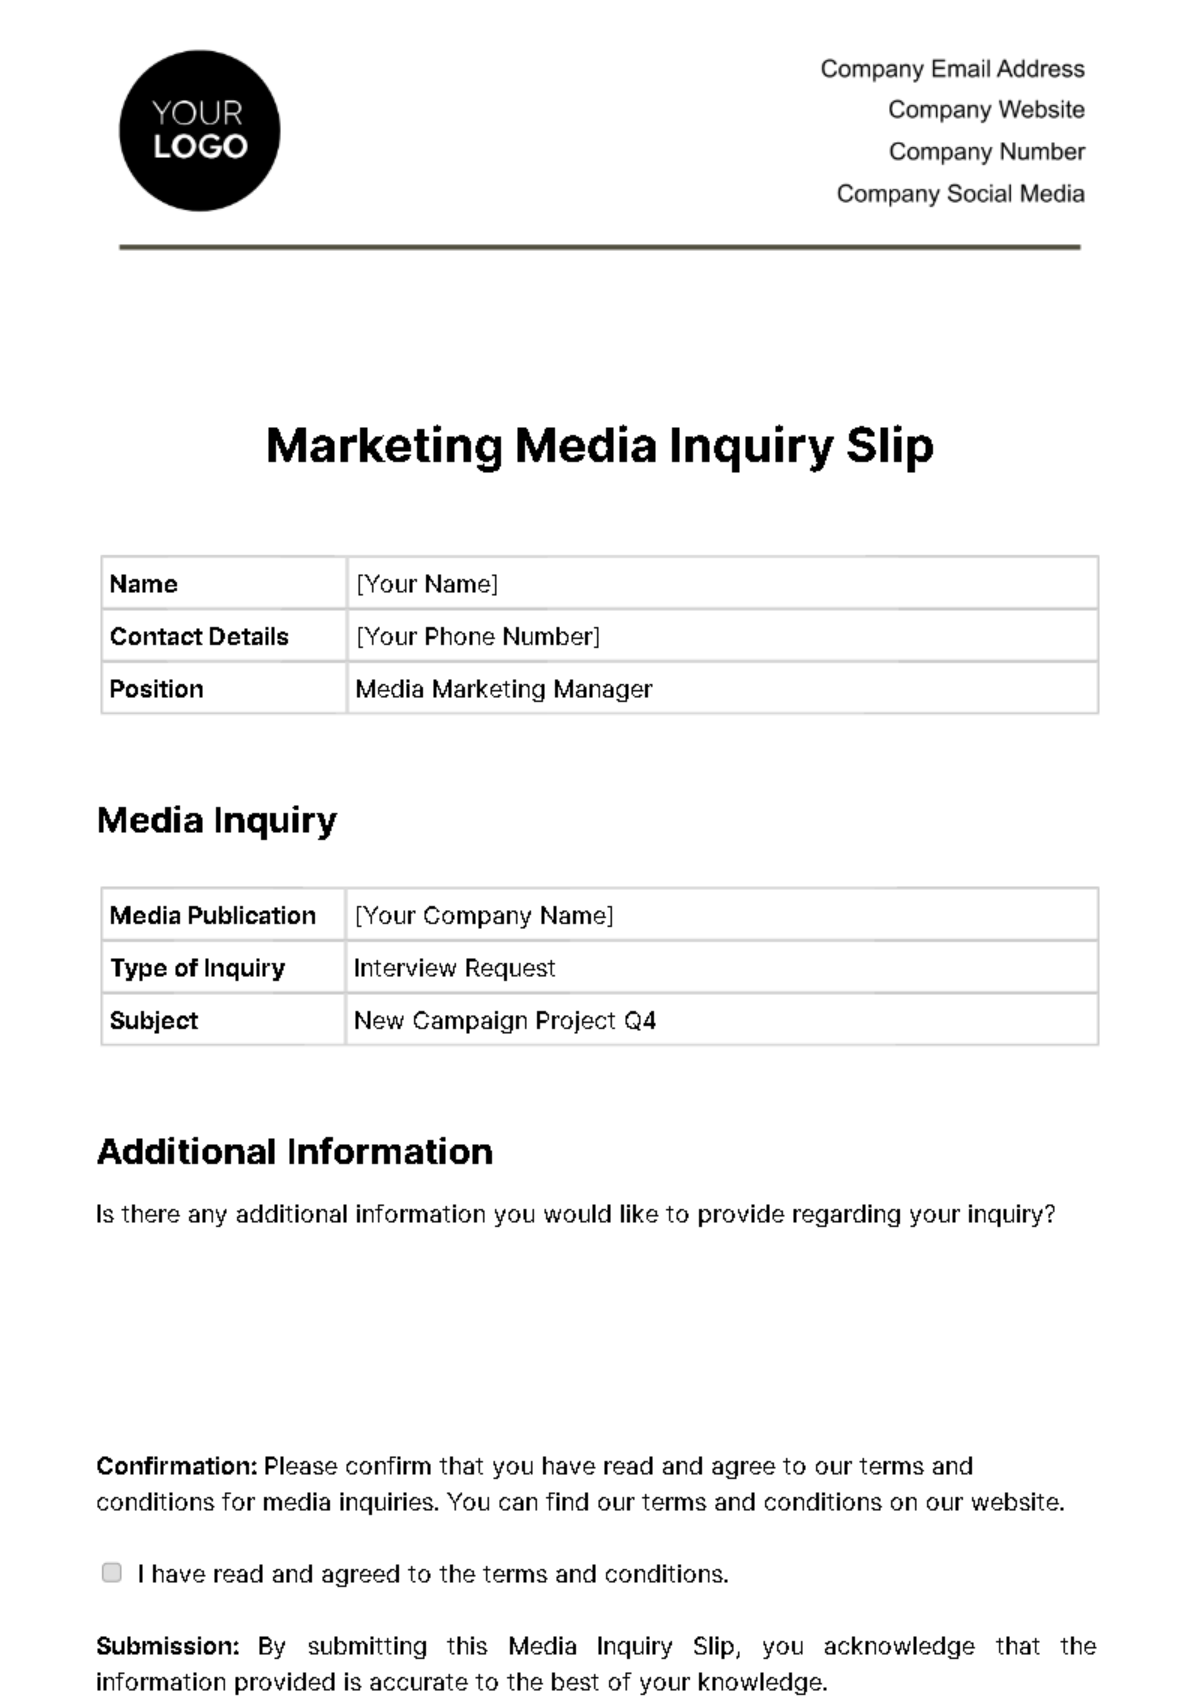 Free Marketing Media Inquiry Slip Template